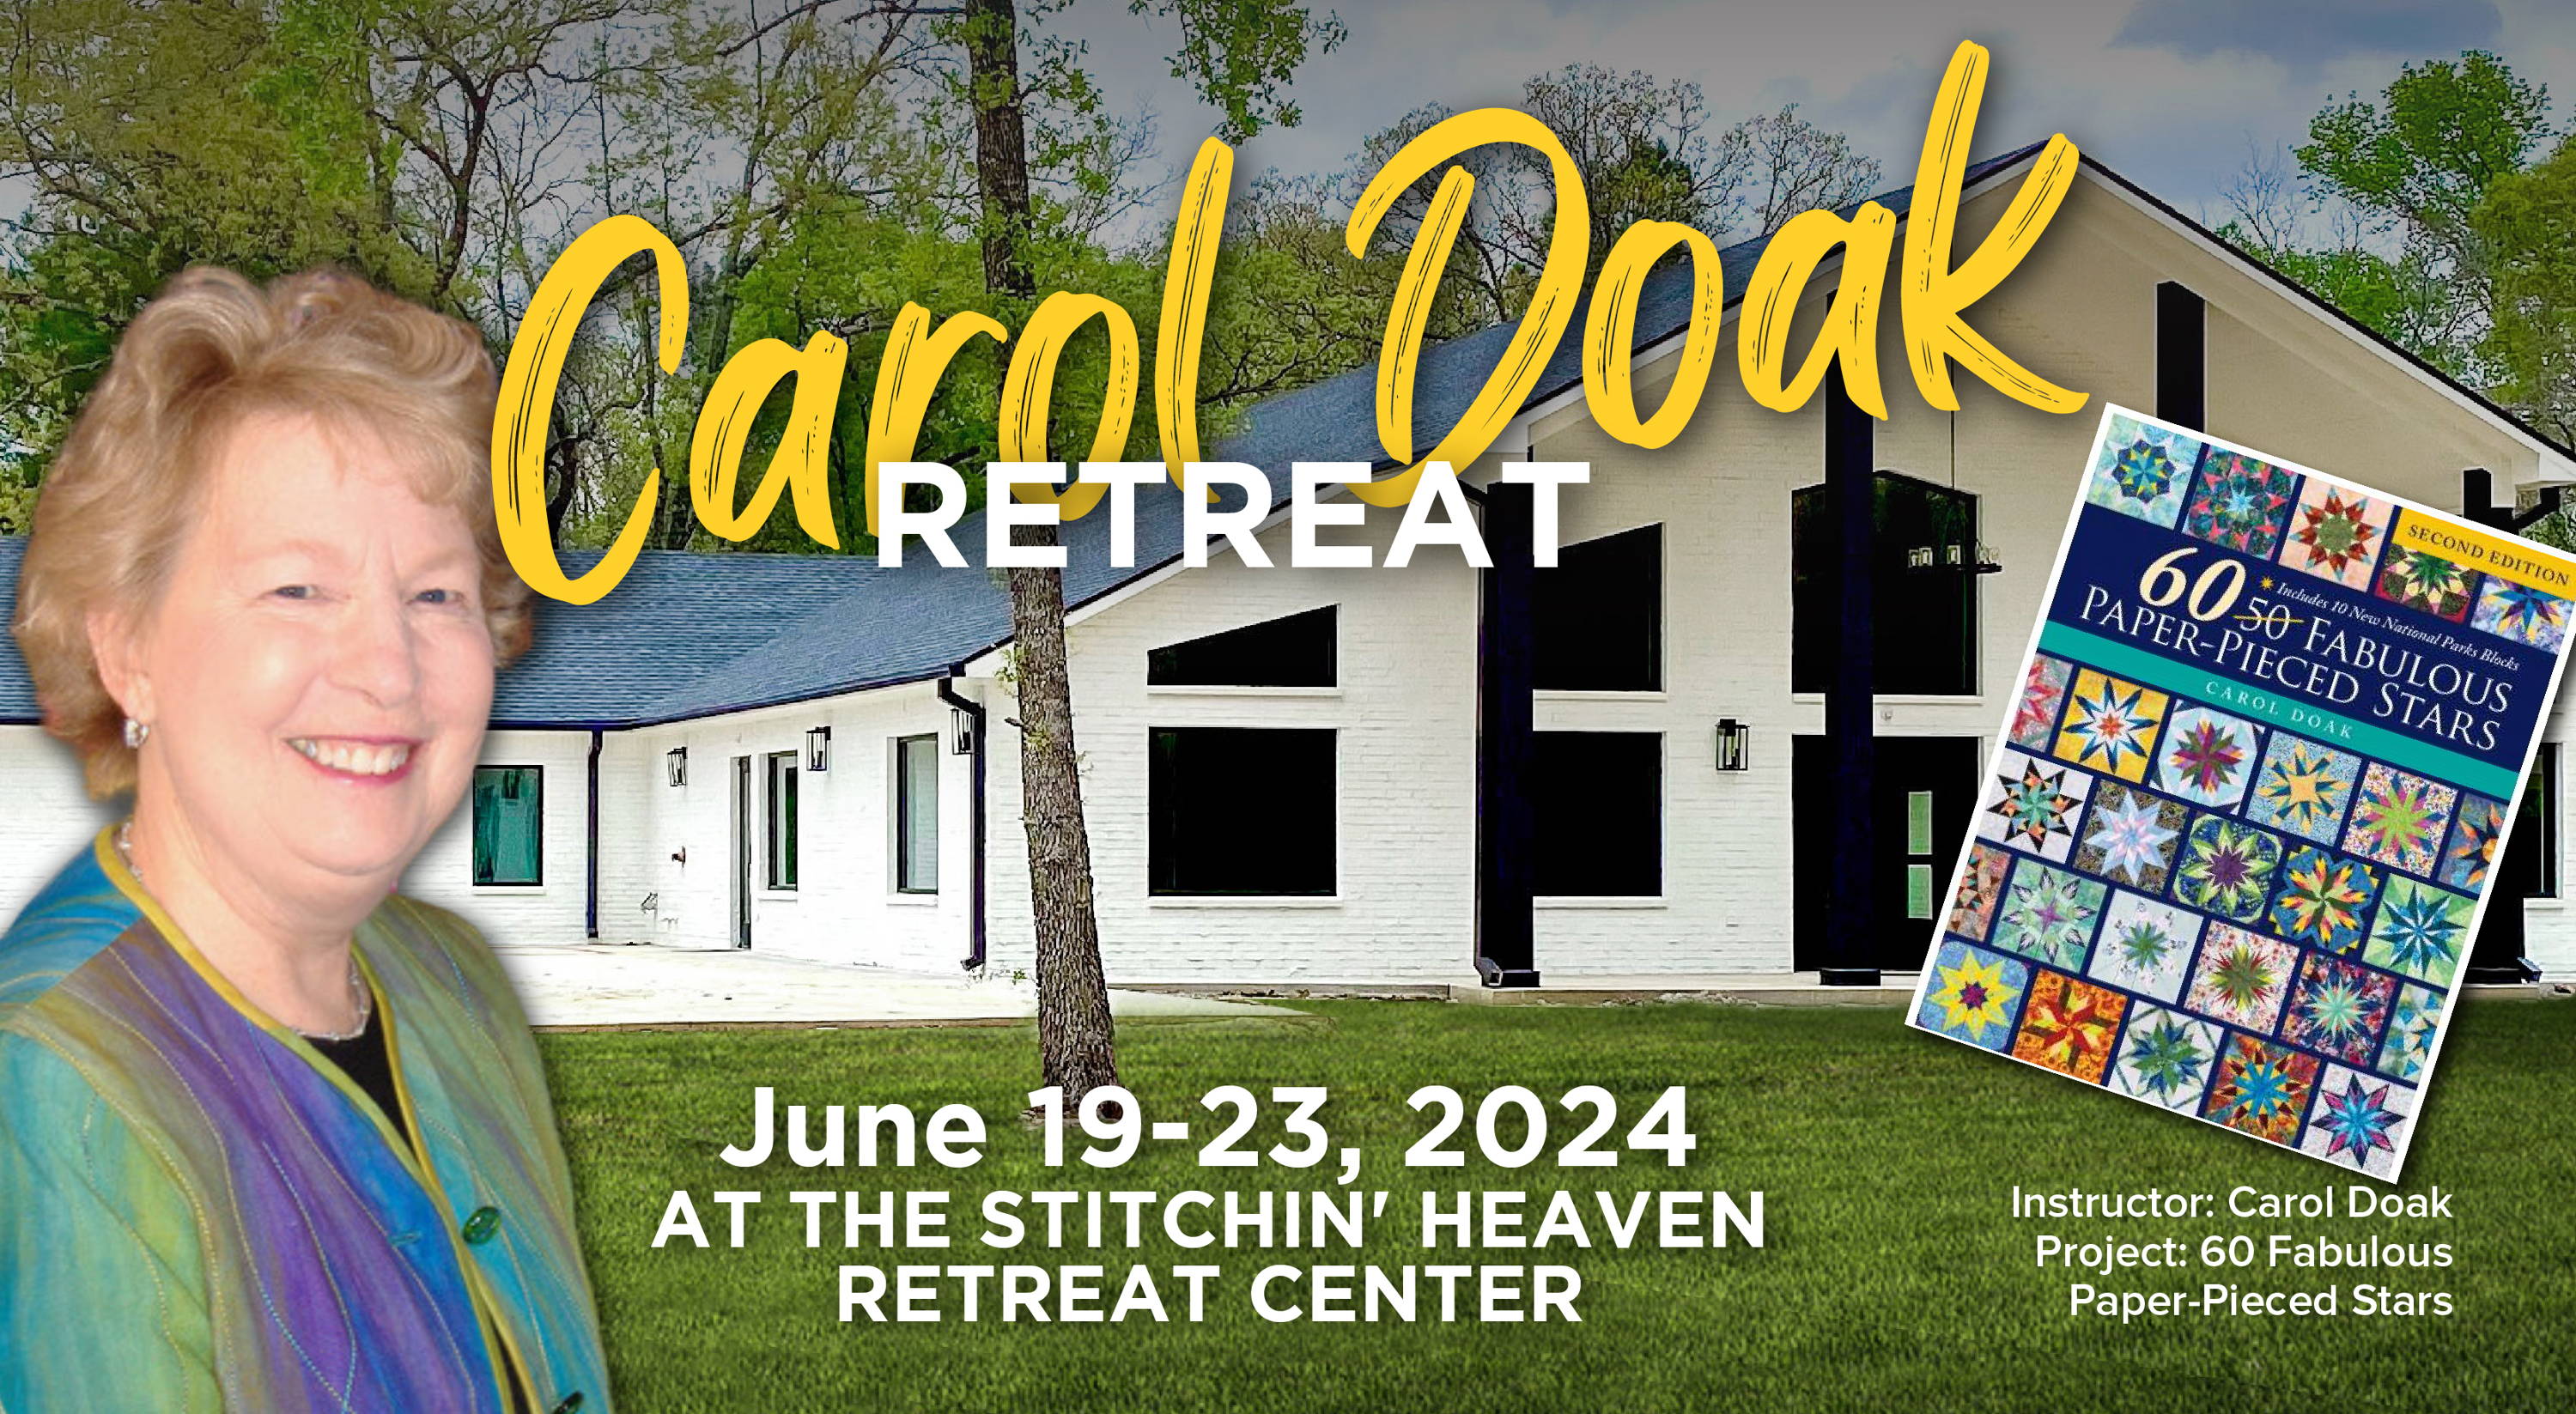 Caorl Doak Retreat June 19-23, 2023 graphic